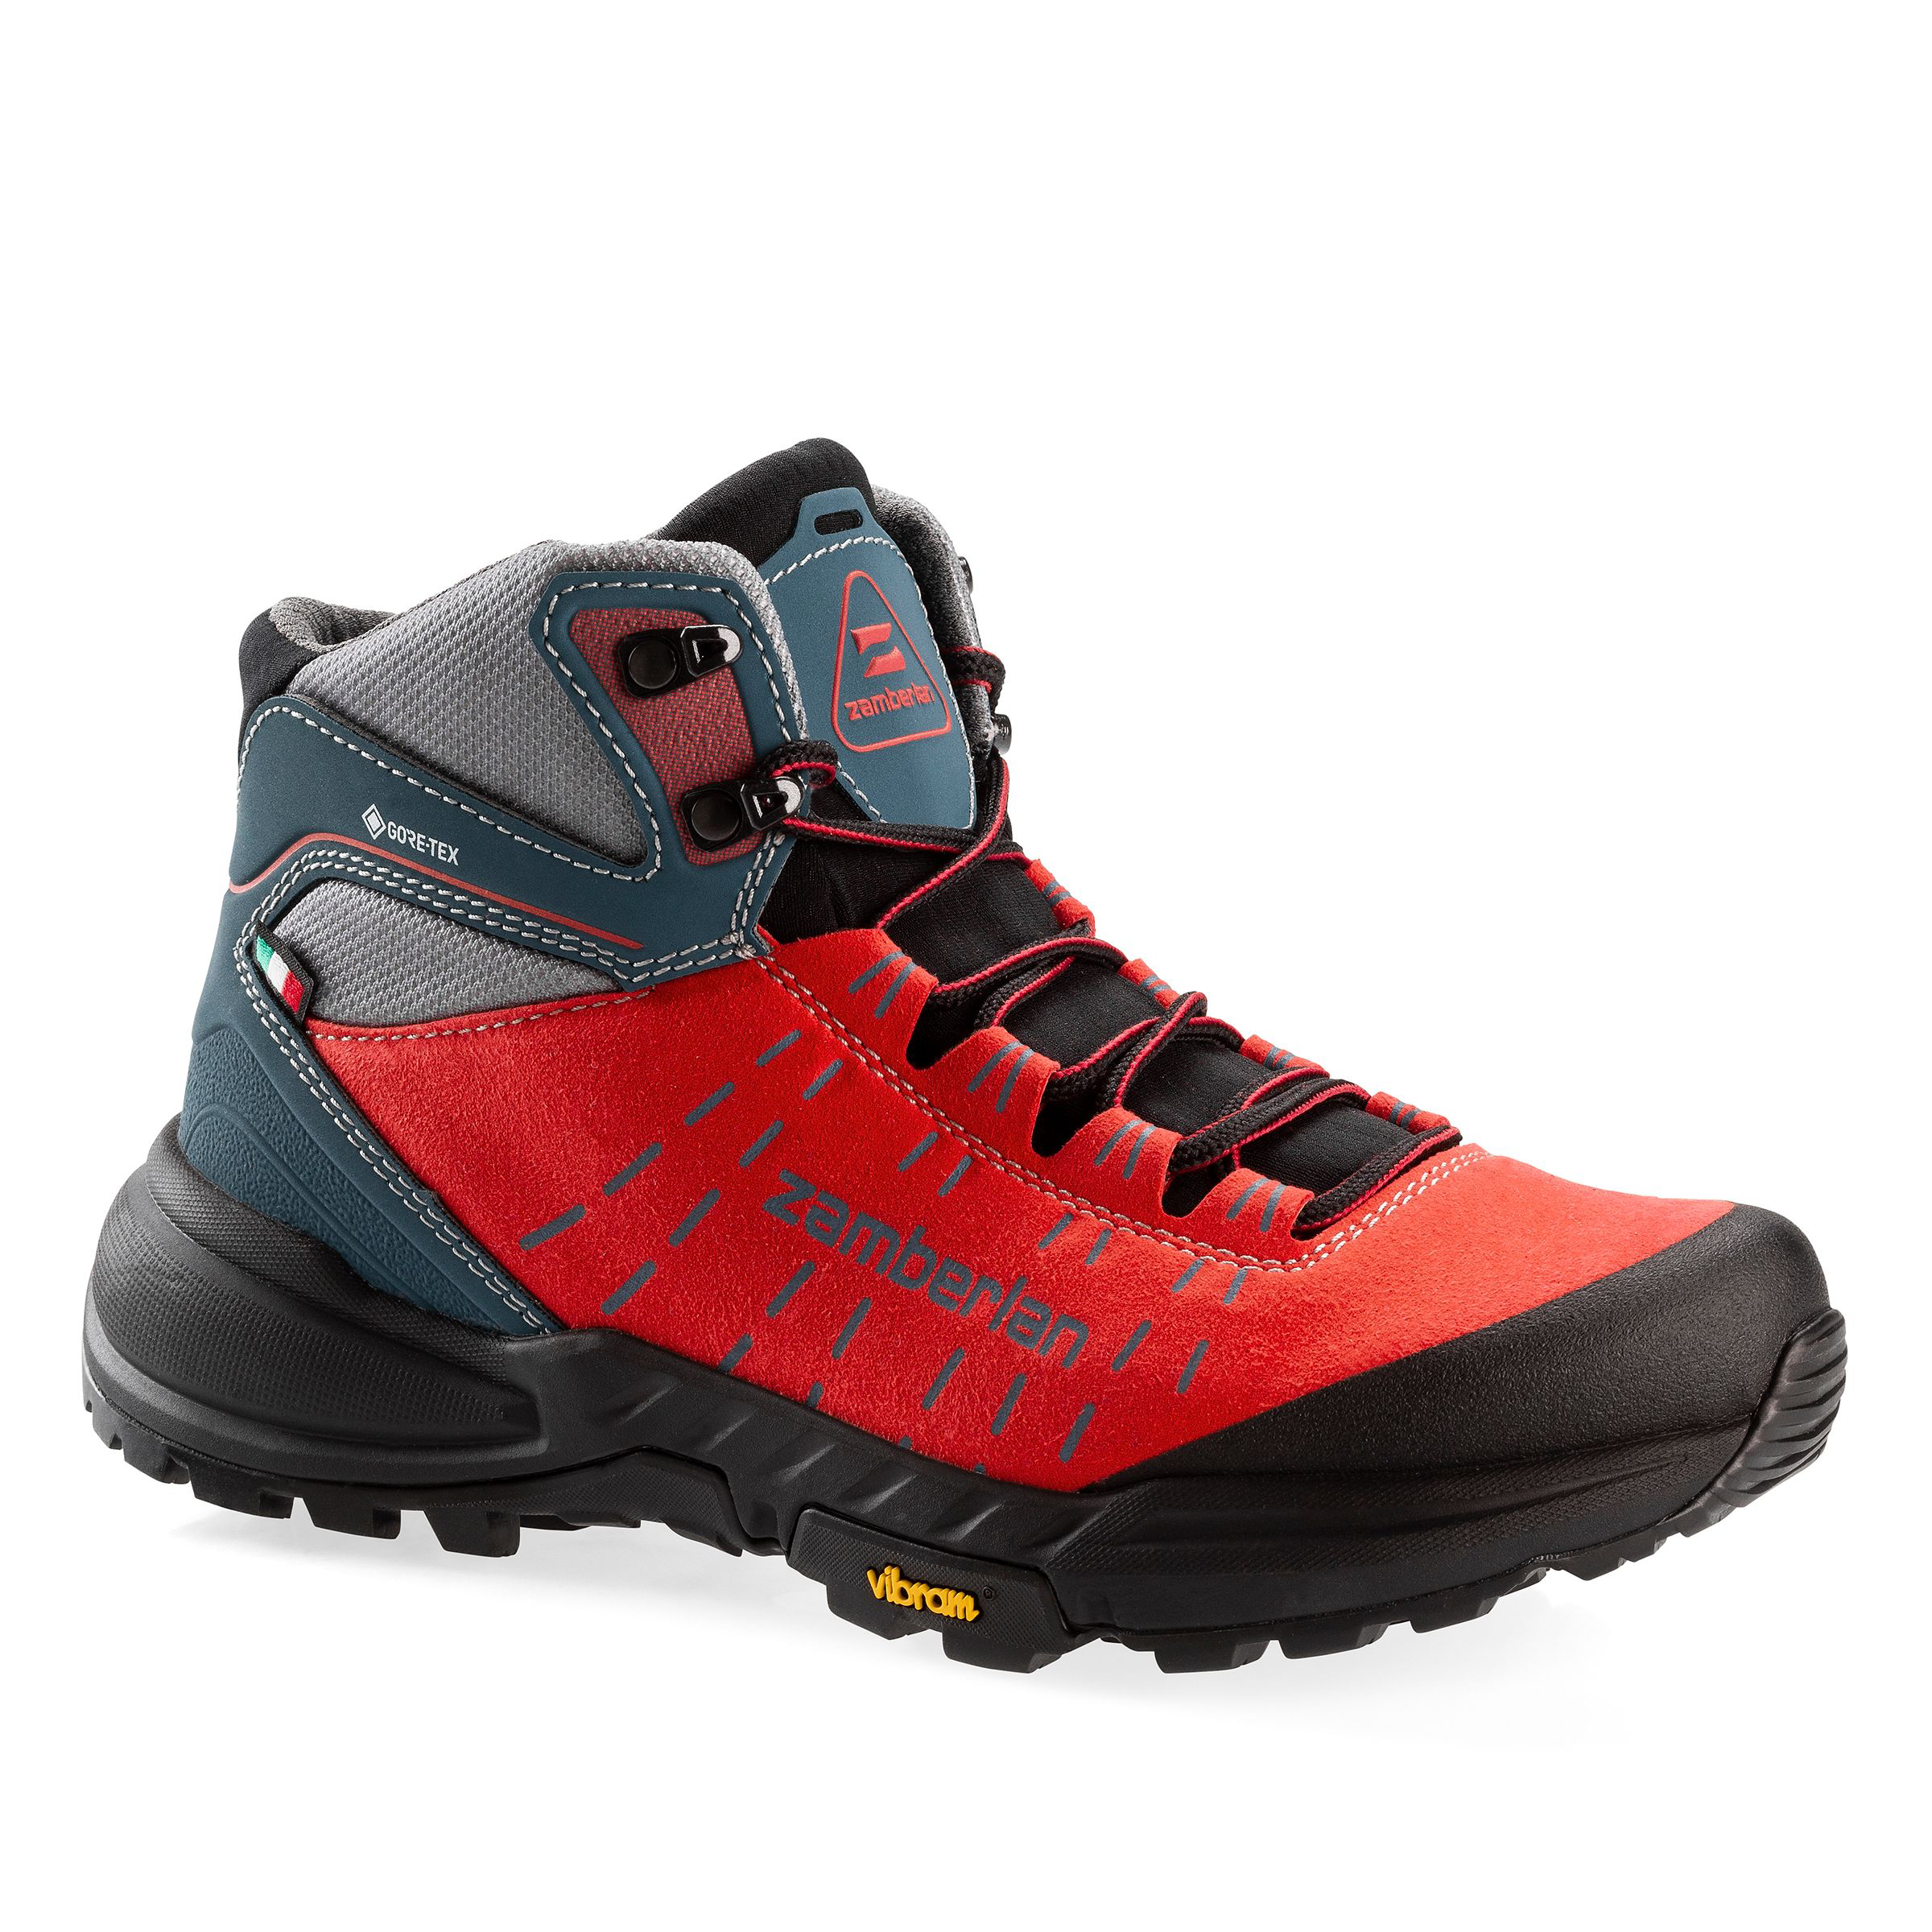 Zamberlan 334 Circe GTX Waterproof Hiking Boots for Ladies - Red - 8.5M